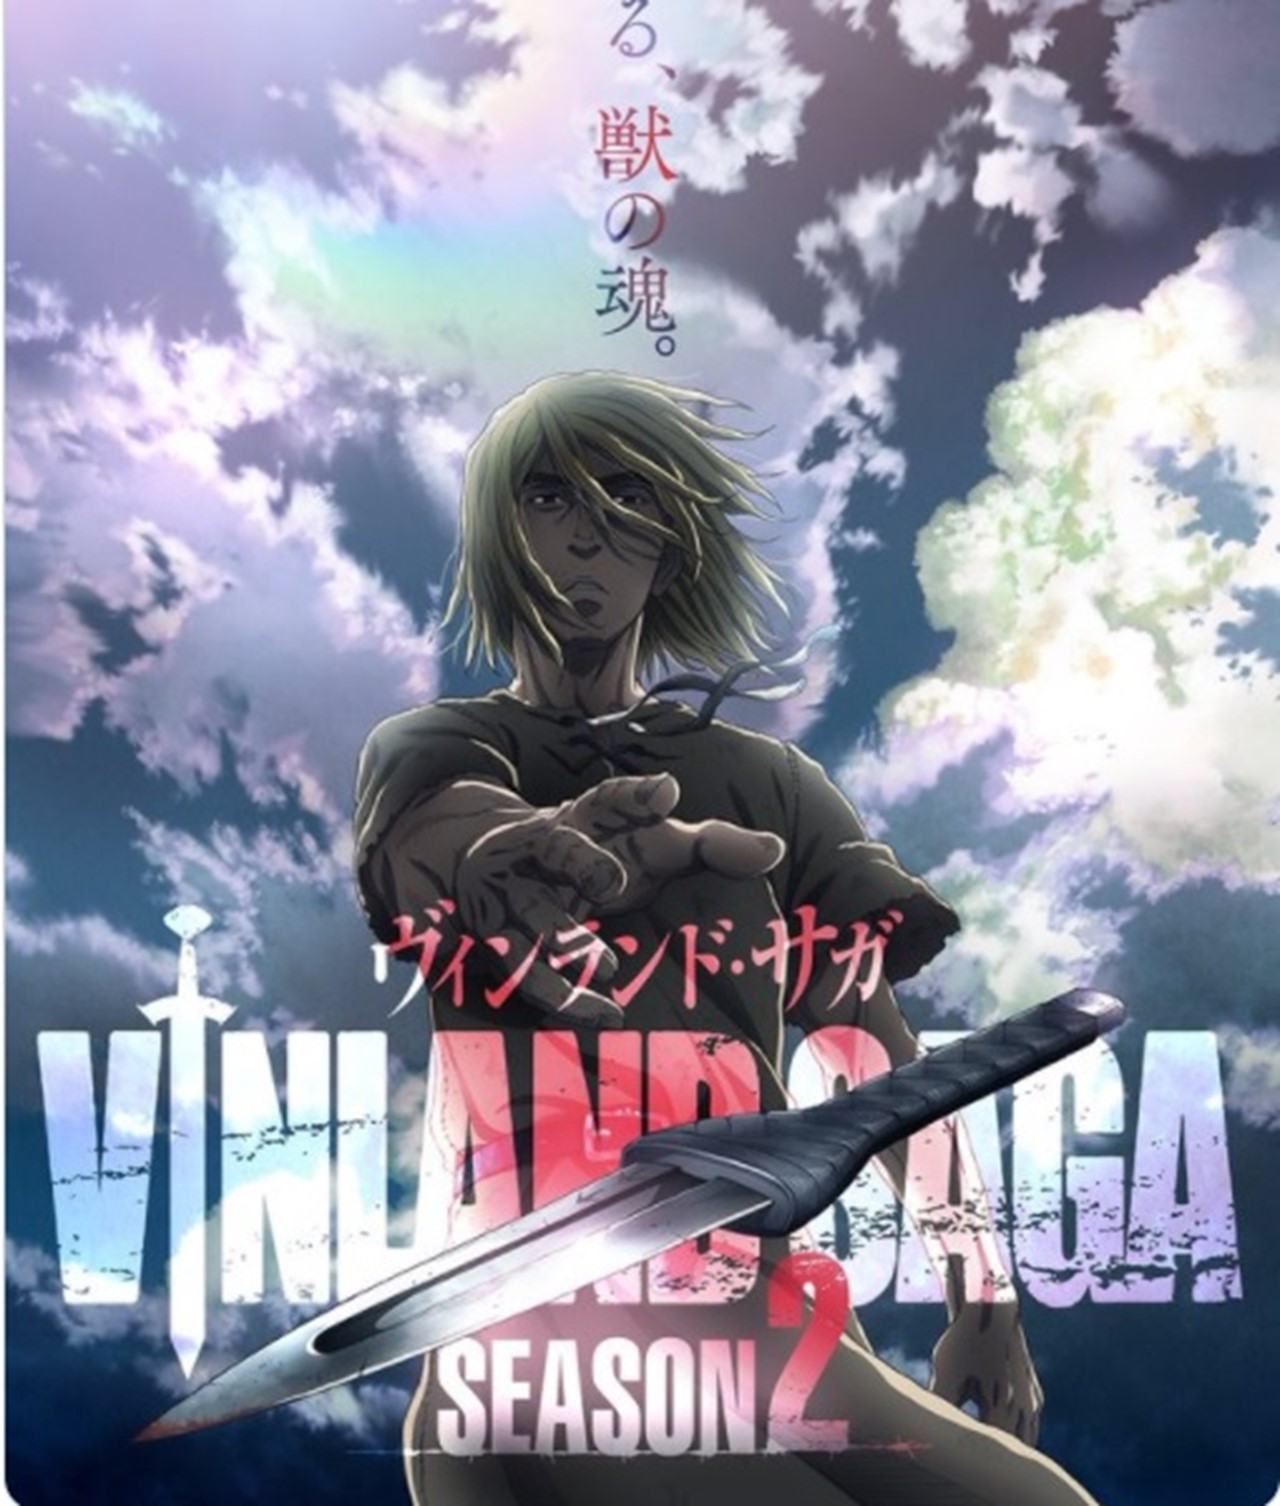 Is the Vinlandsaga anime popular? - Quora